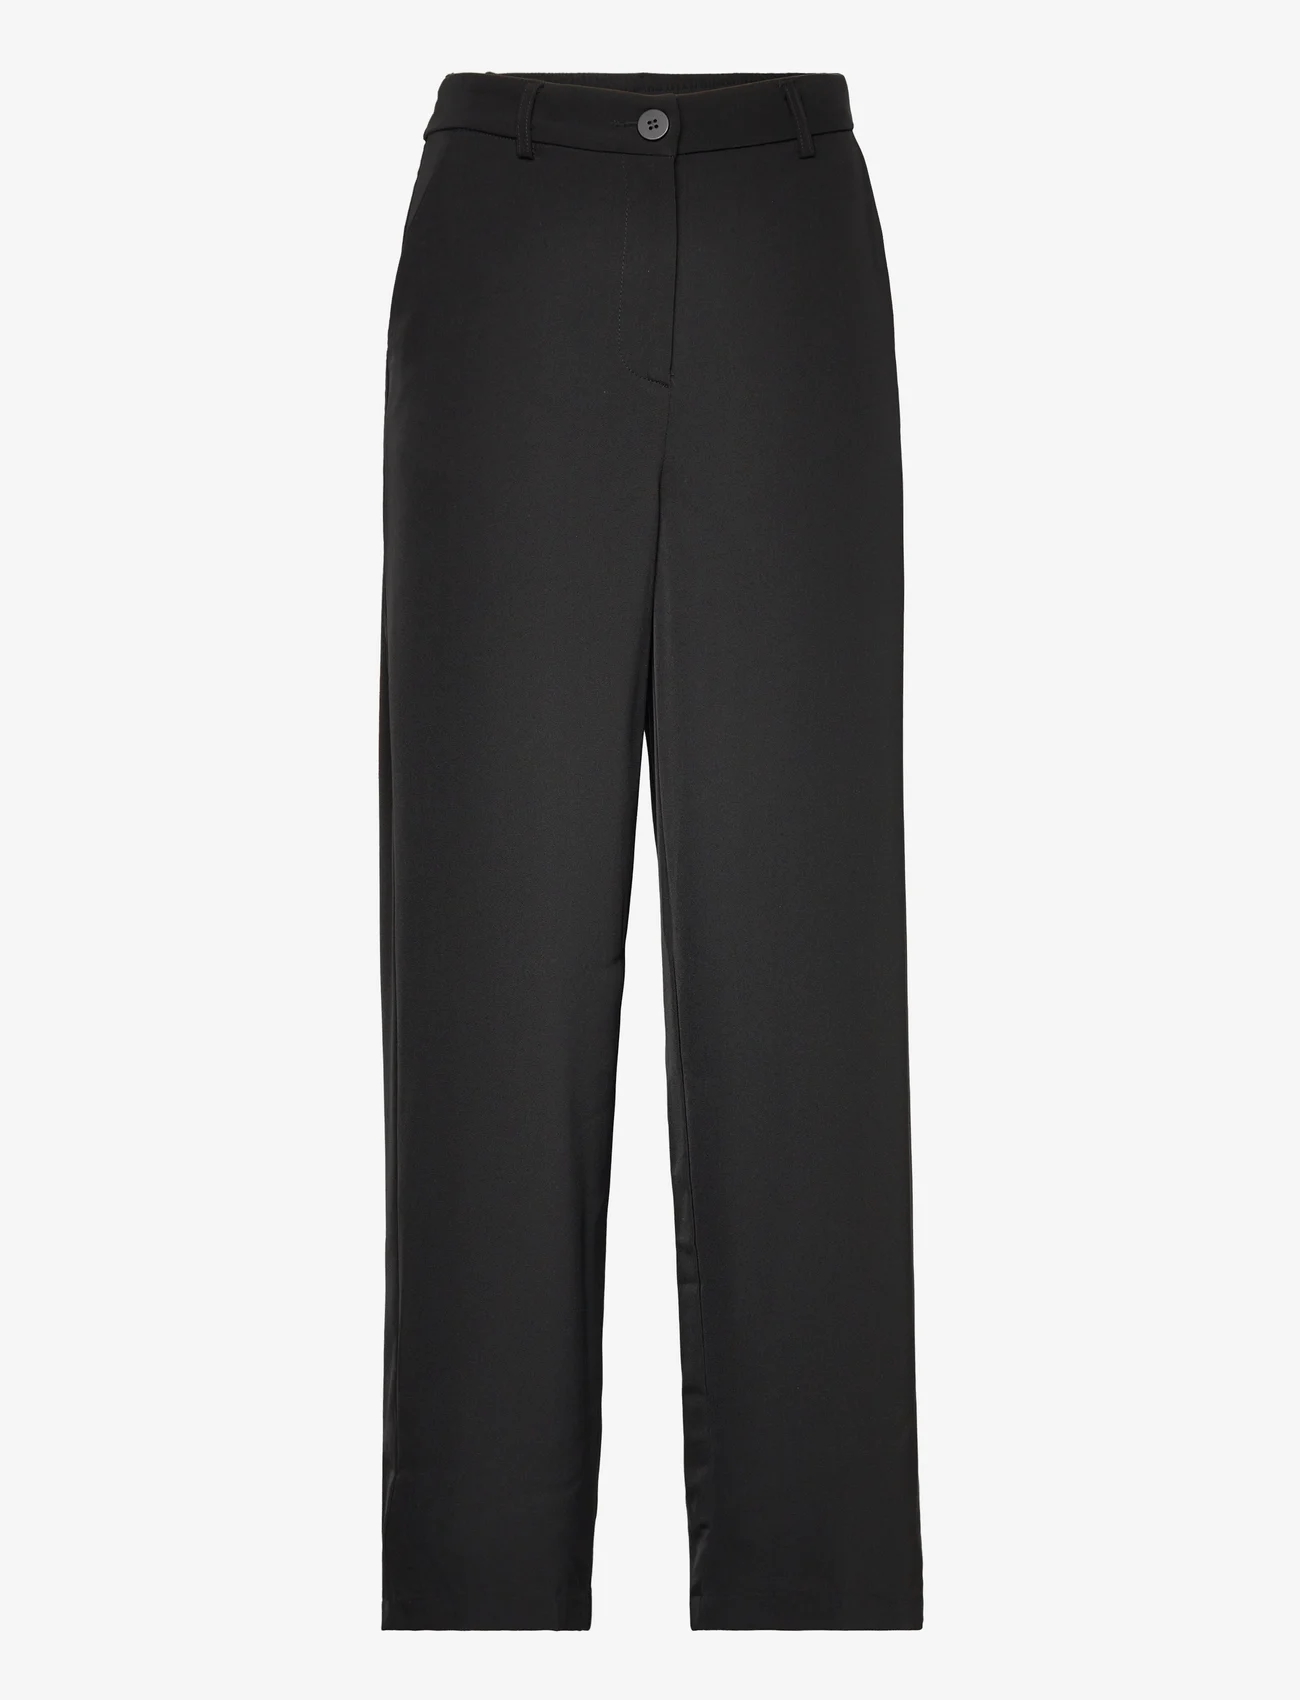 Coster Copenhagen - CC Heart long loose trousers - bukser med brede ben - black - 0